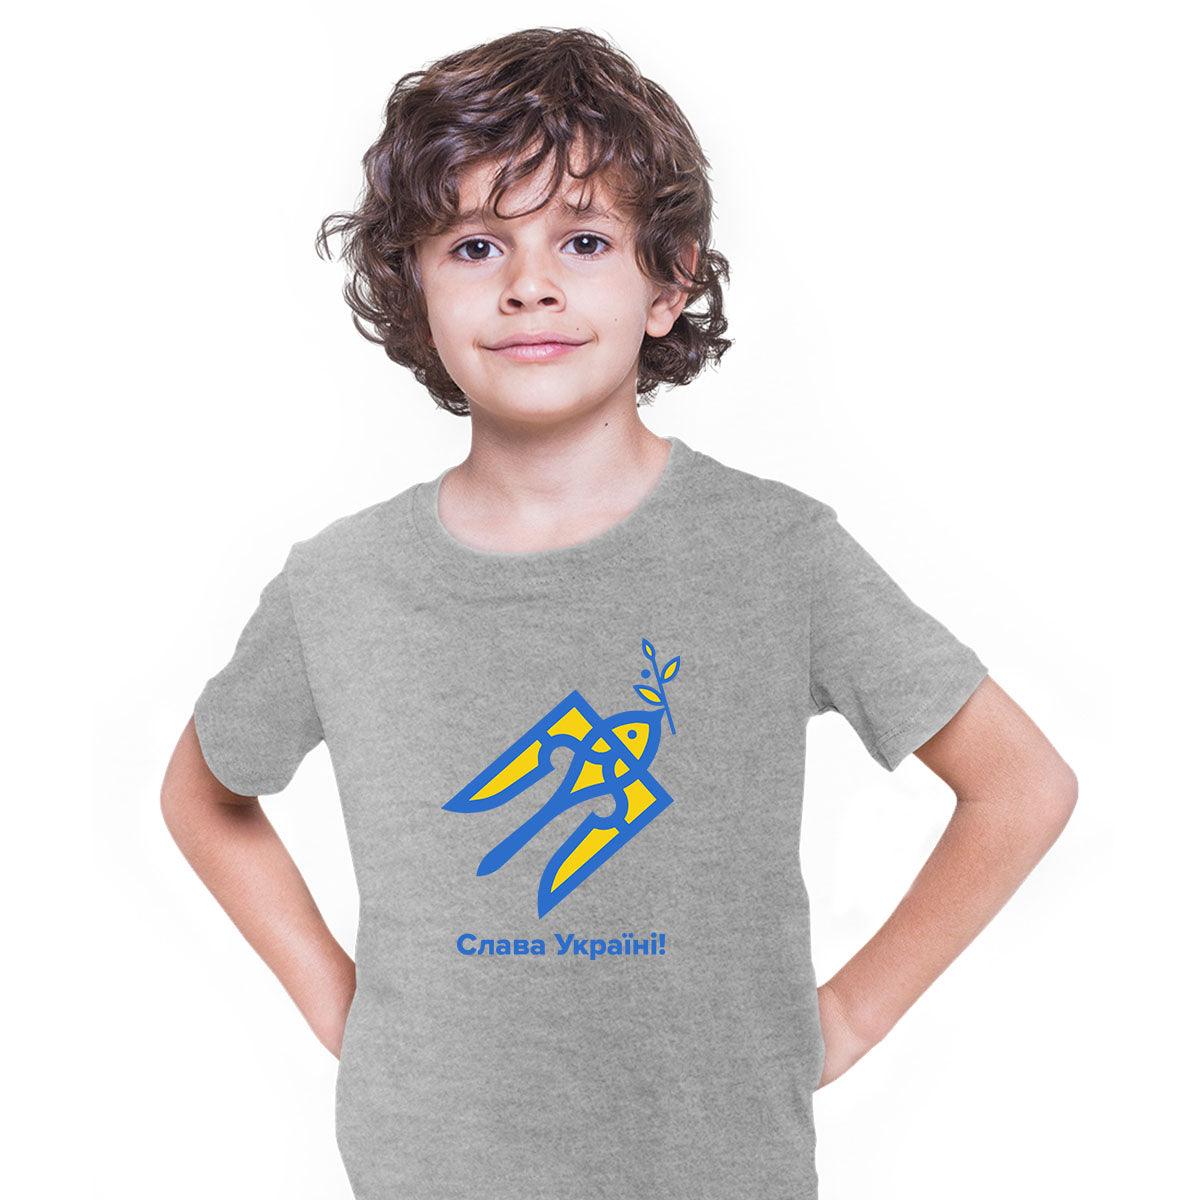 Glory Ukraine Kids T-shirt Slava Ukraini Peace No War - Kuzi Tees